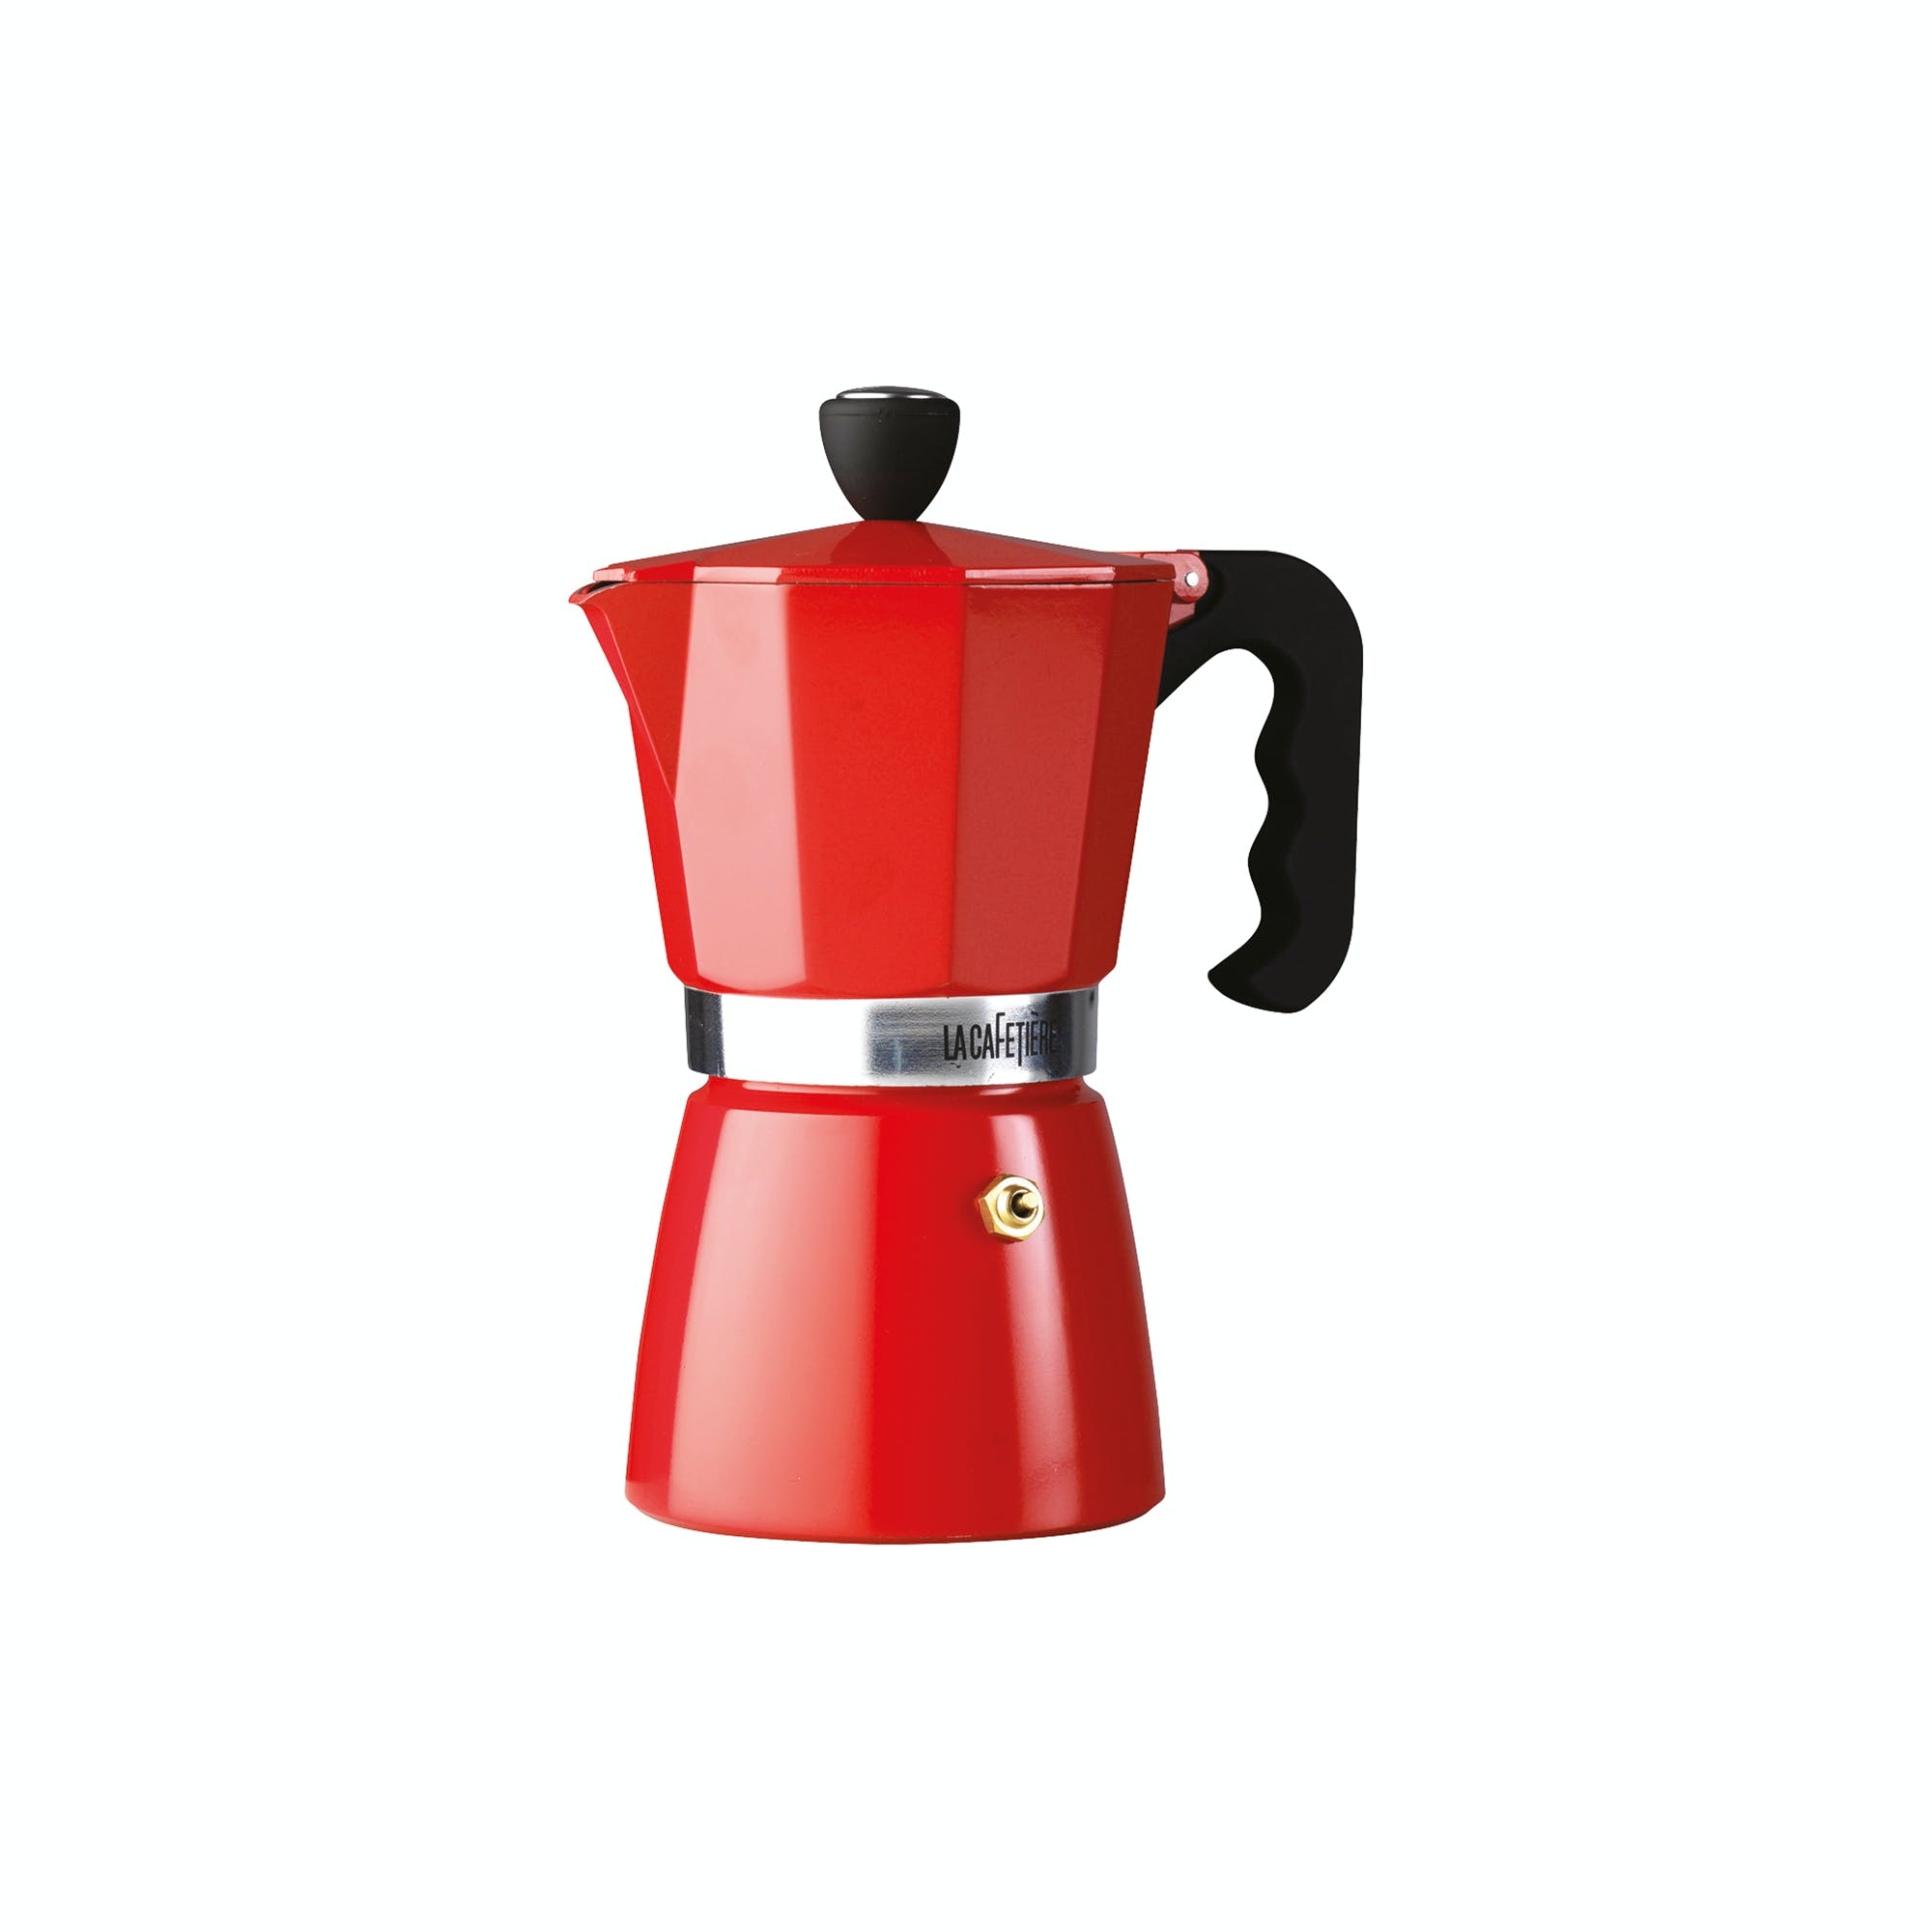 La Cafetiére Classic Espresso Maker 3 Cup in Red